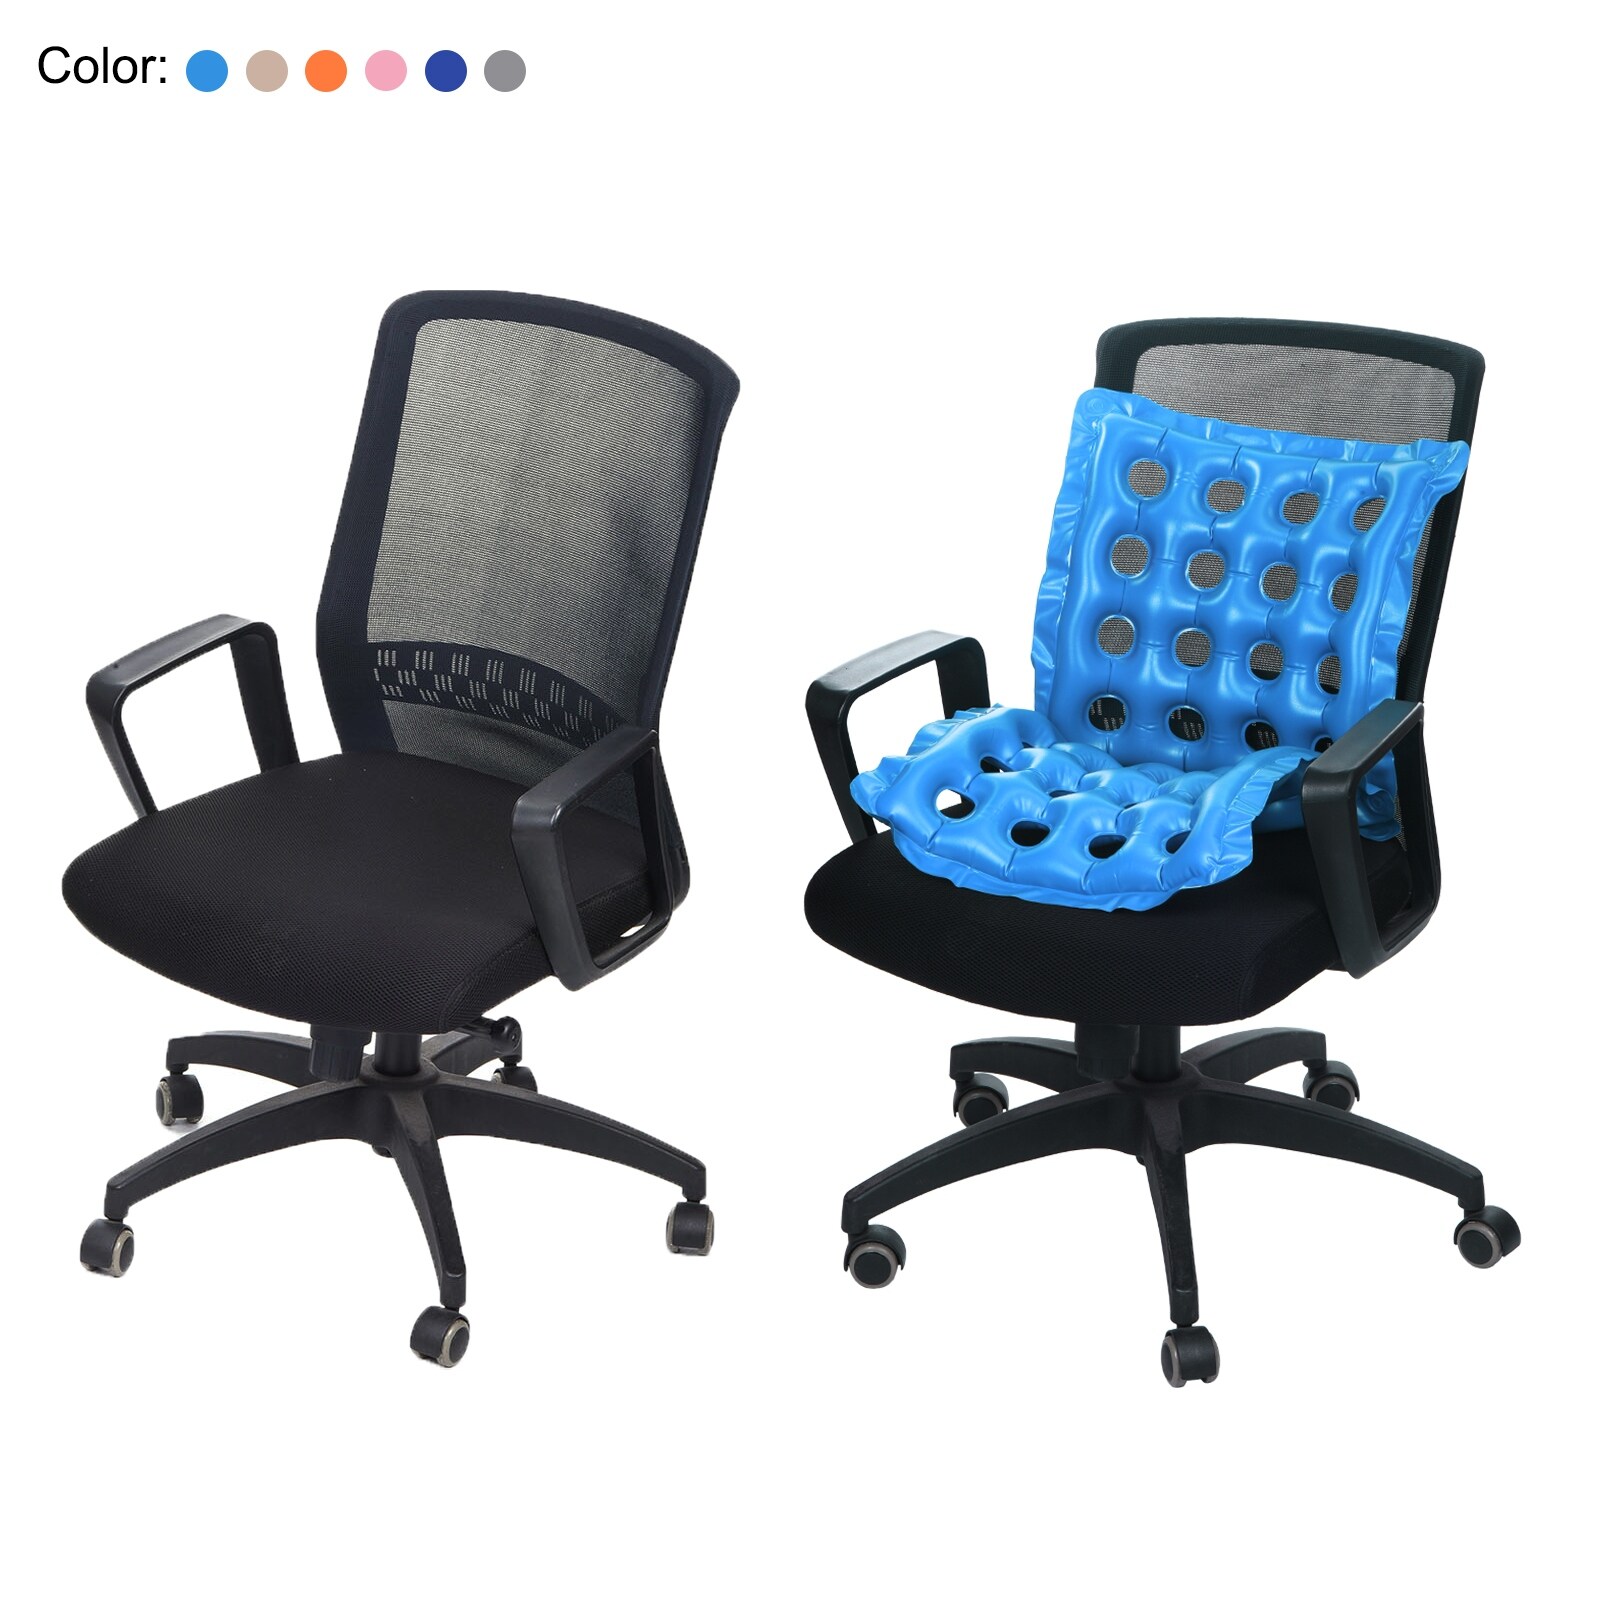 2pcs Inflatable Seat Cushion, Air Chair Cushions Square Seat Pad